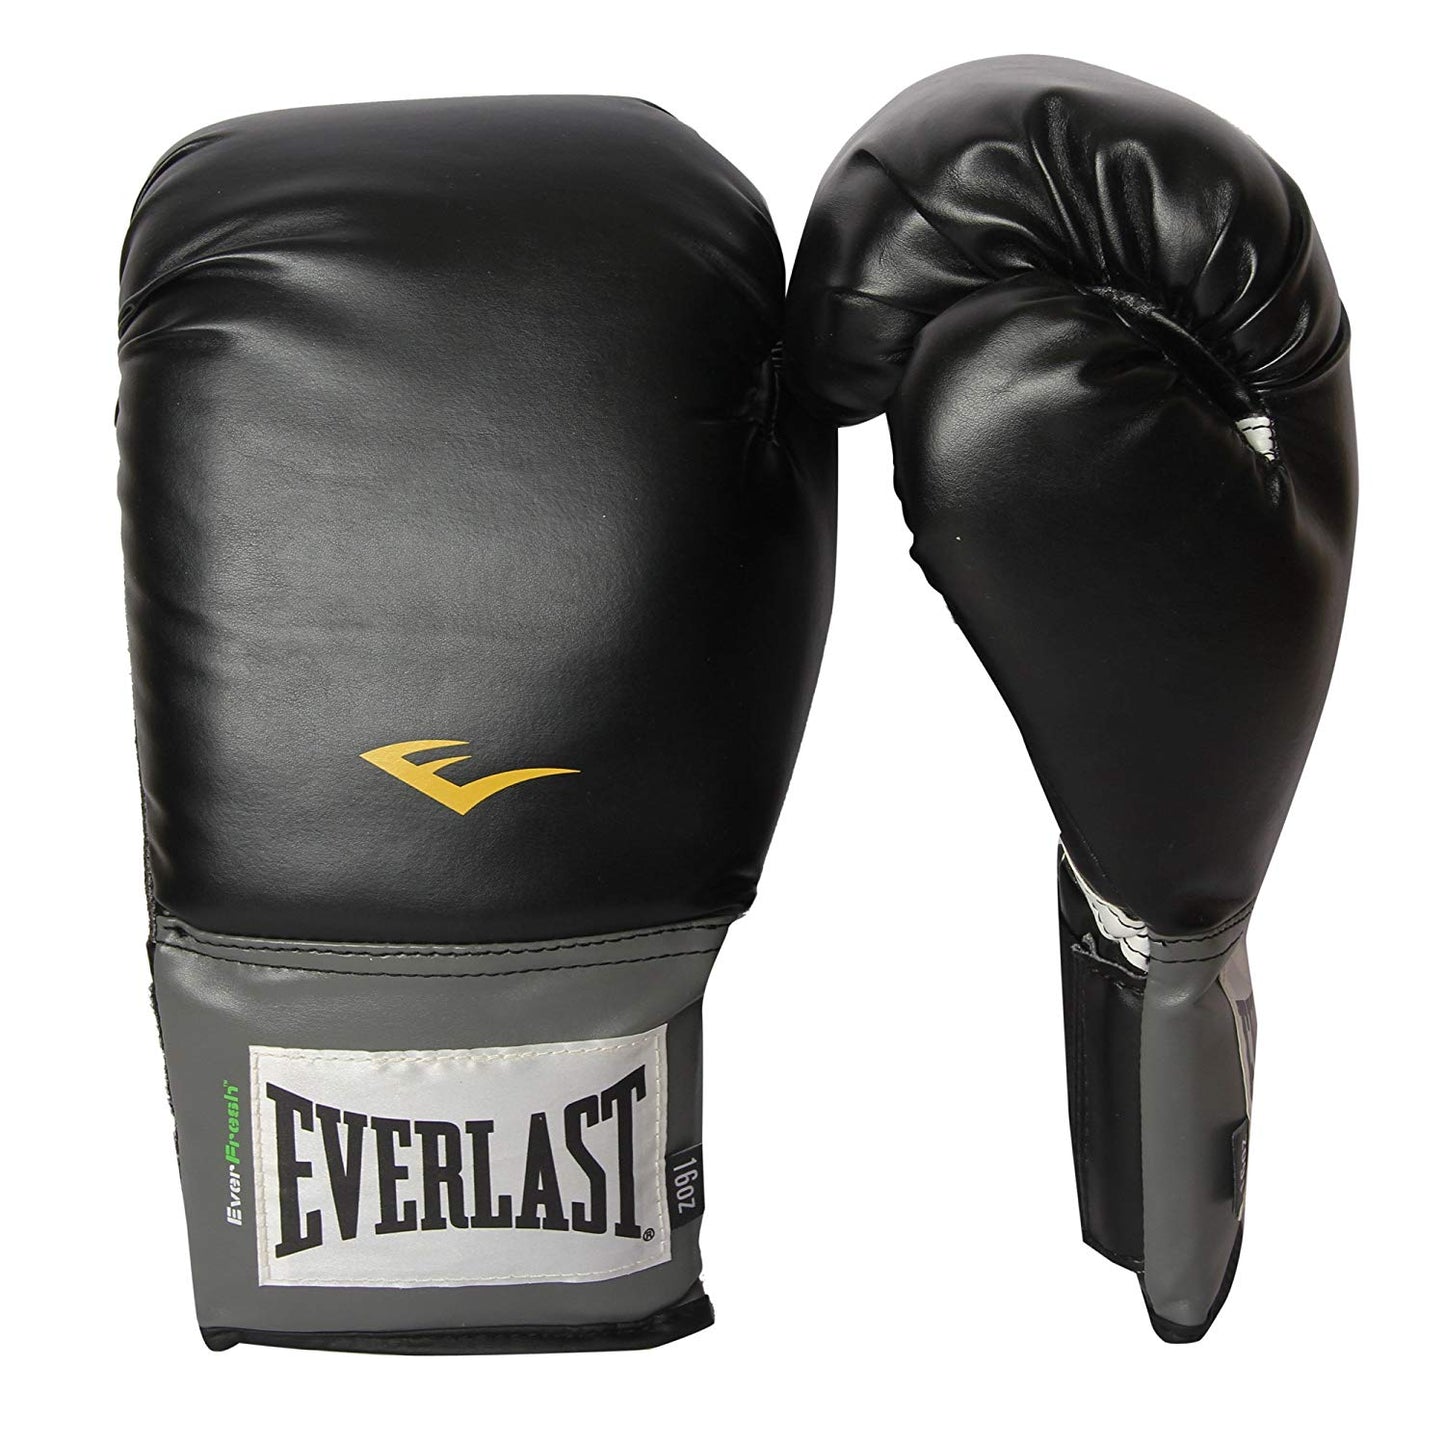 Everlast Pro Style Training Boxing Gloves - Best Price online Prokicksports.com